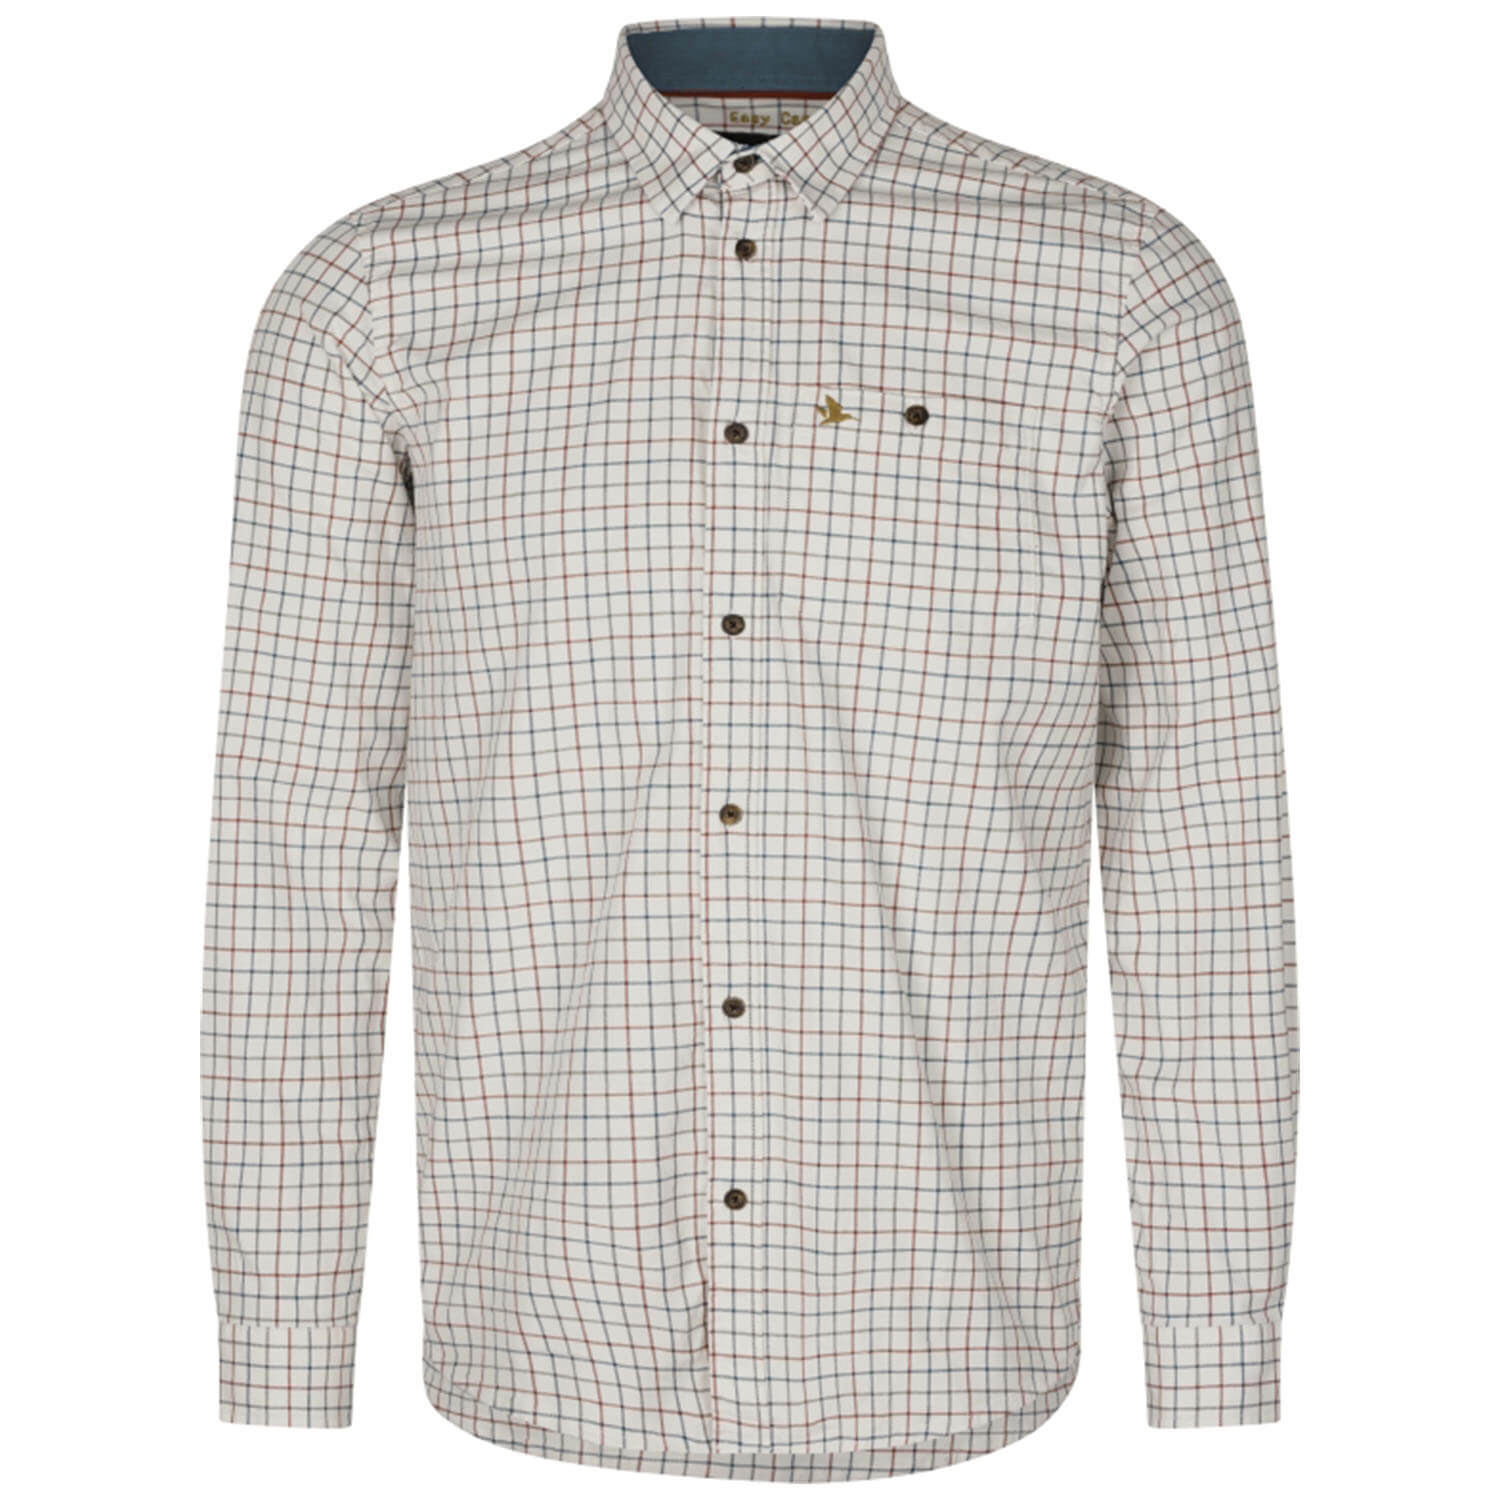 Seeland shirt oxford (Grape Leaf/Terracotta Check) - Hunting Shirts